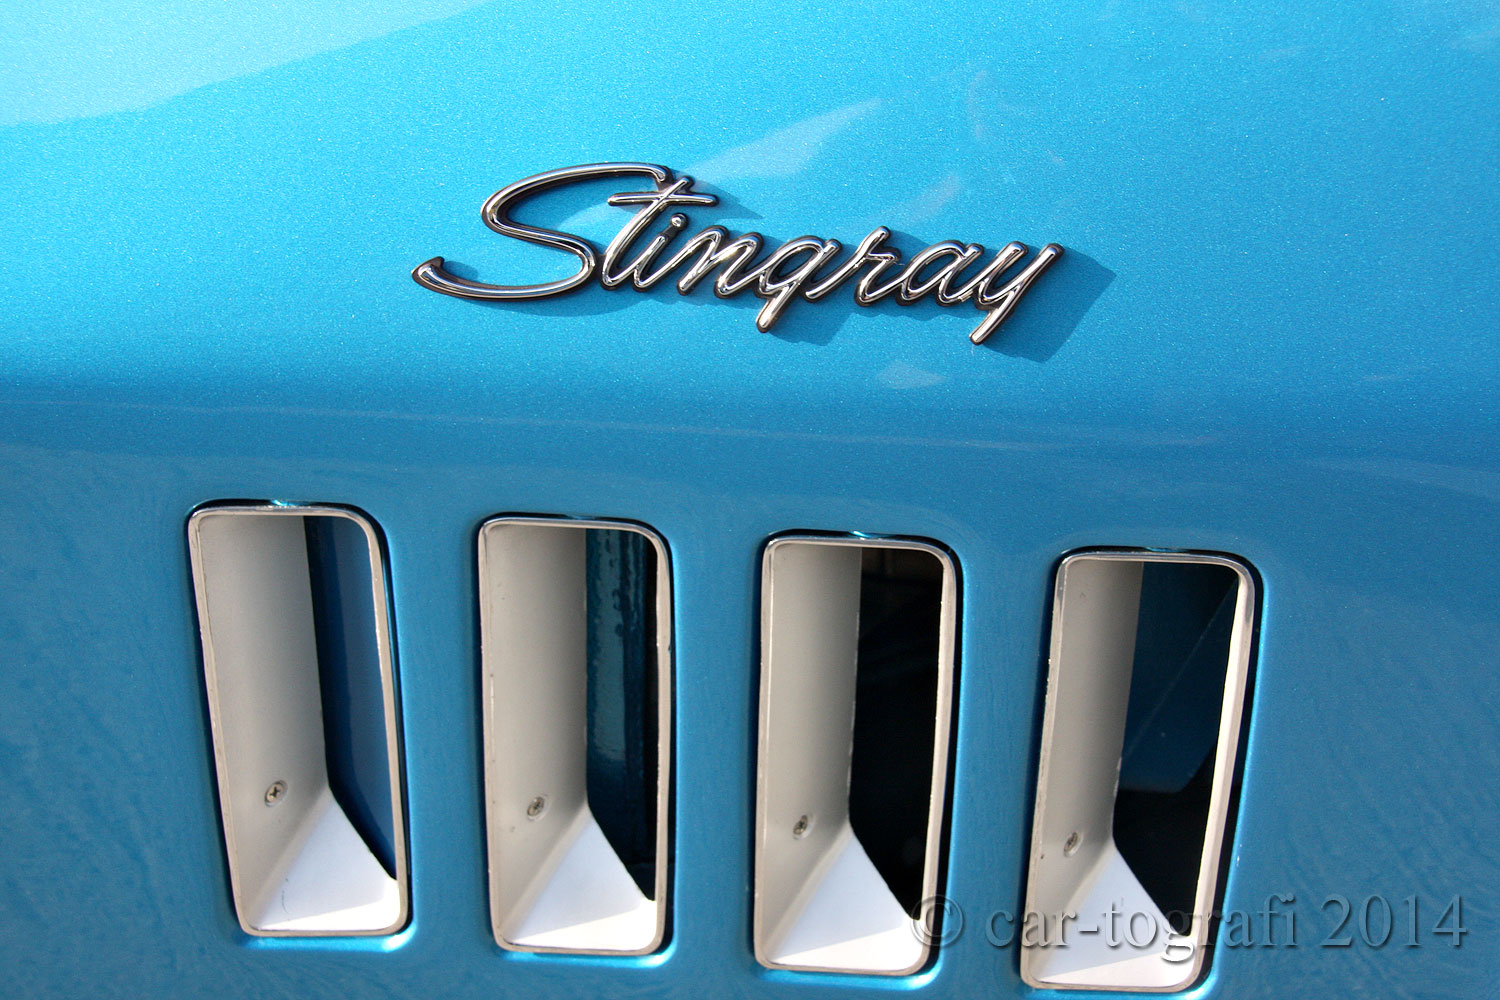 signature-stingray-car-tografi-2014.jpg